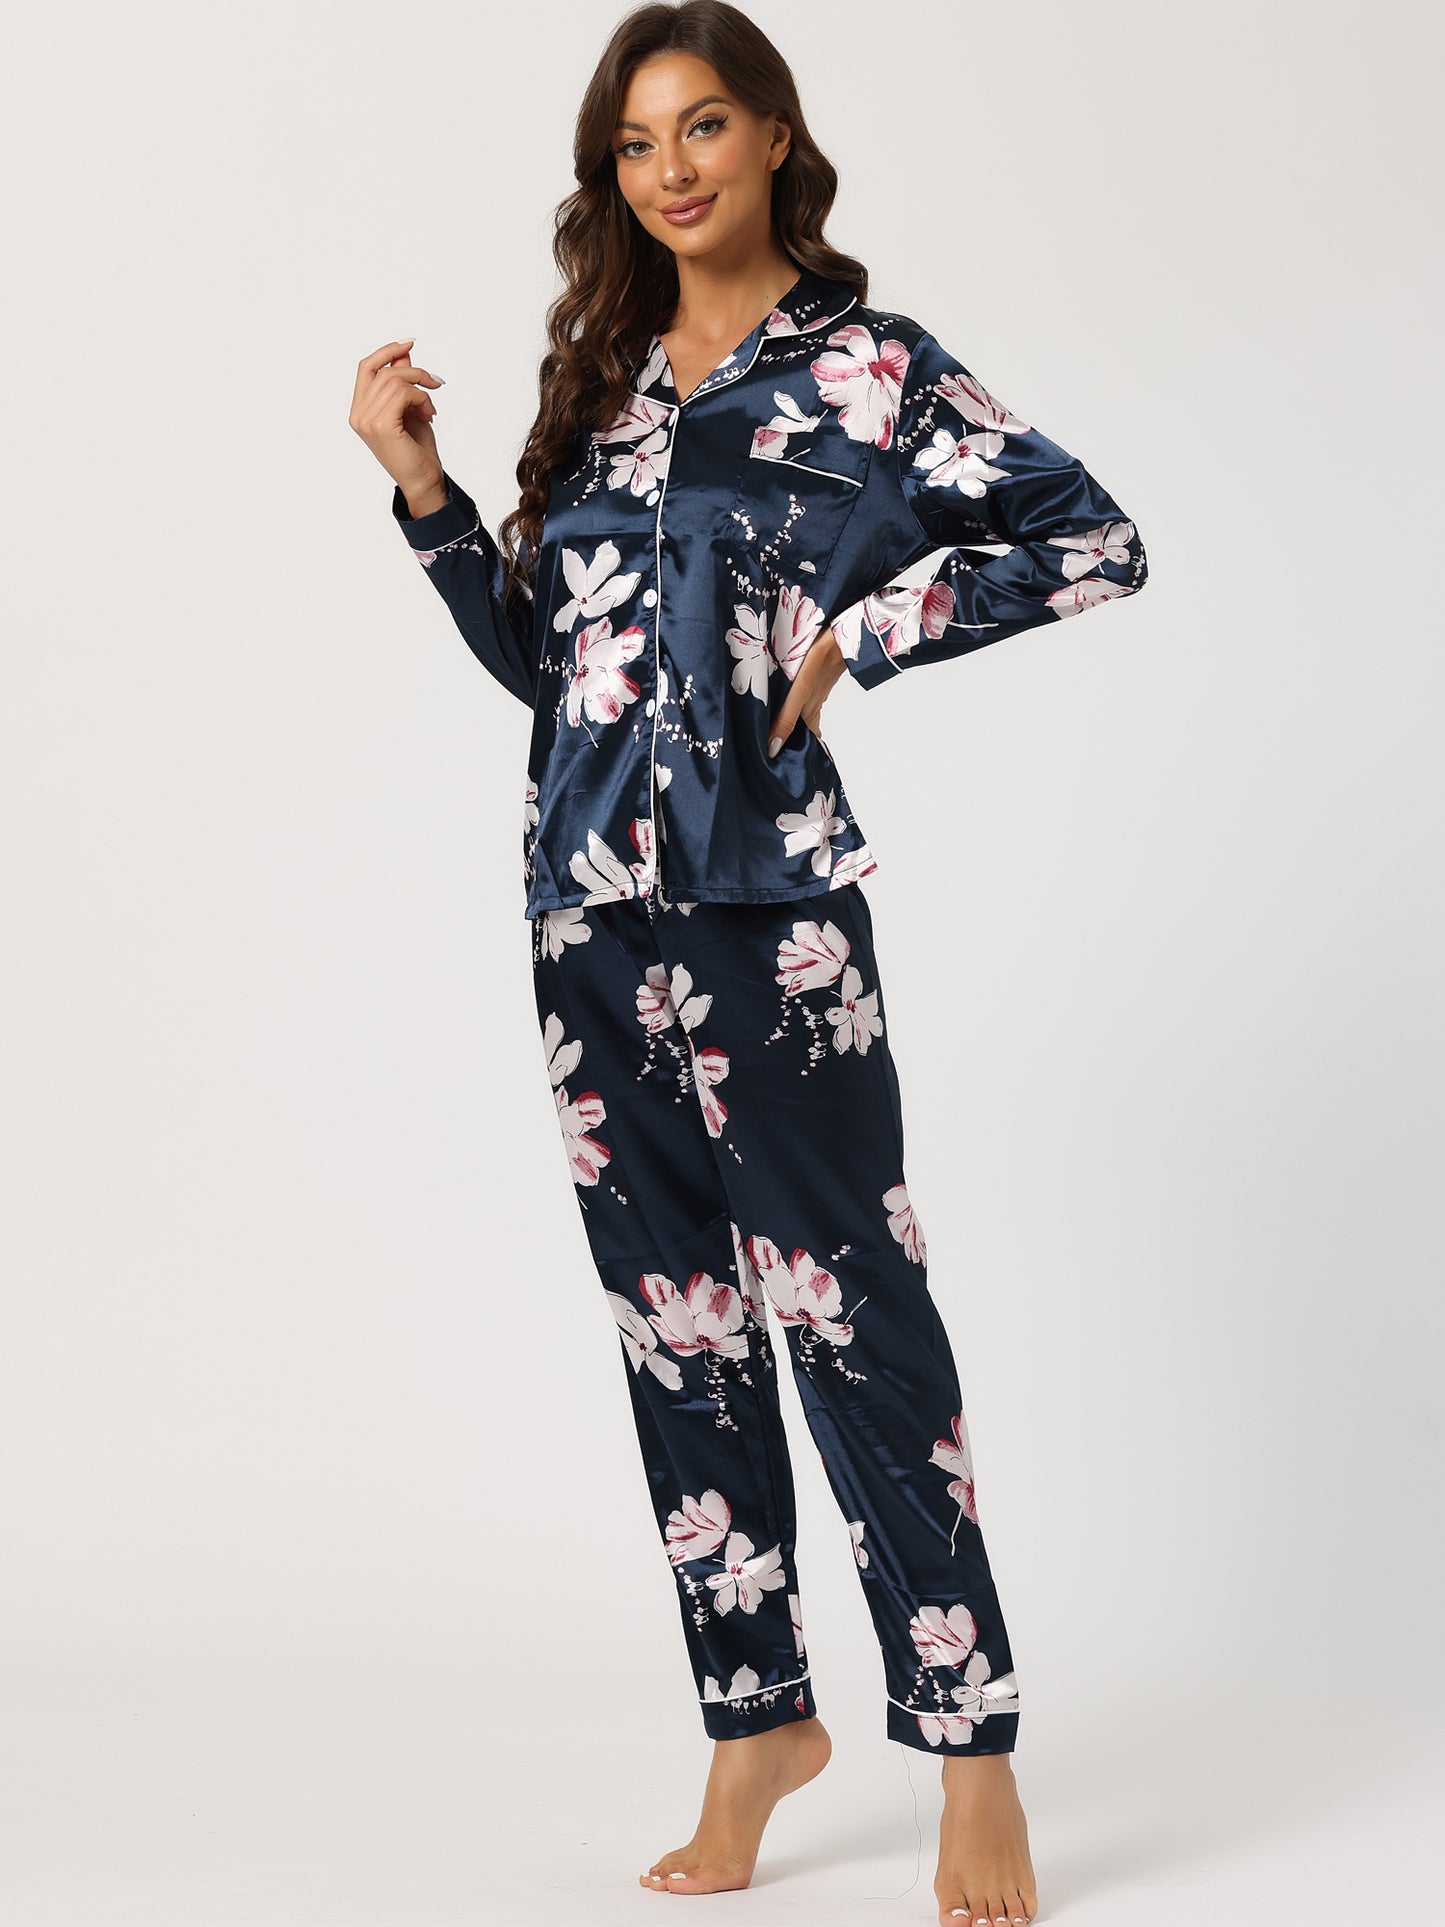 cheibear Pajama Sleep Shirt Nightwear Sleepwear Lounge Satin Pj Sets Navy Blue